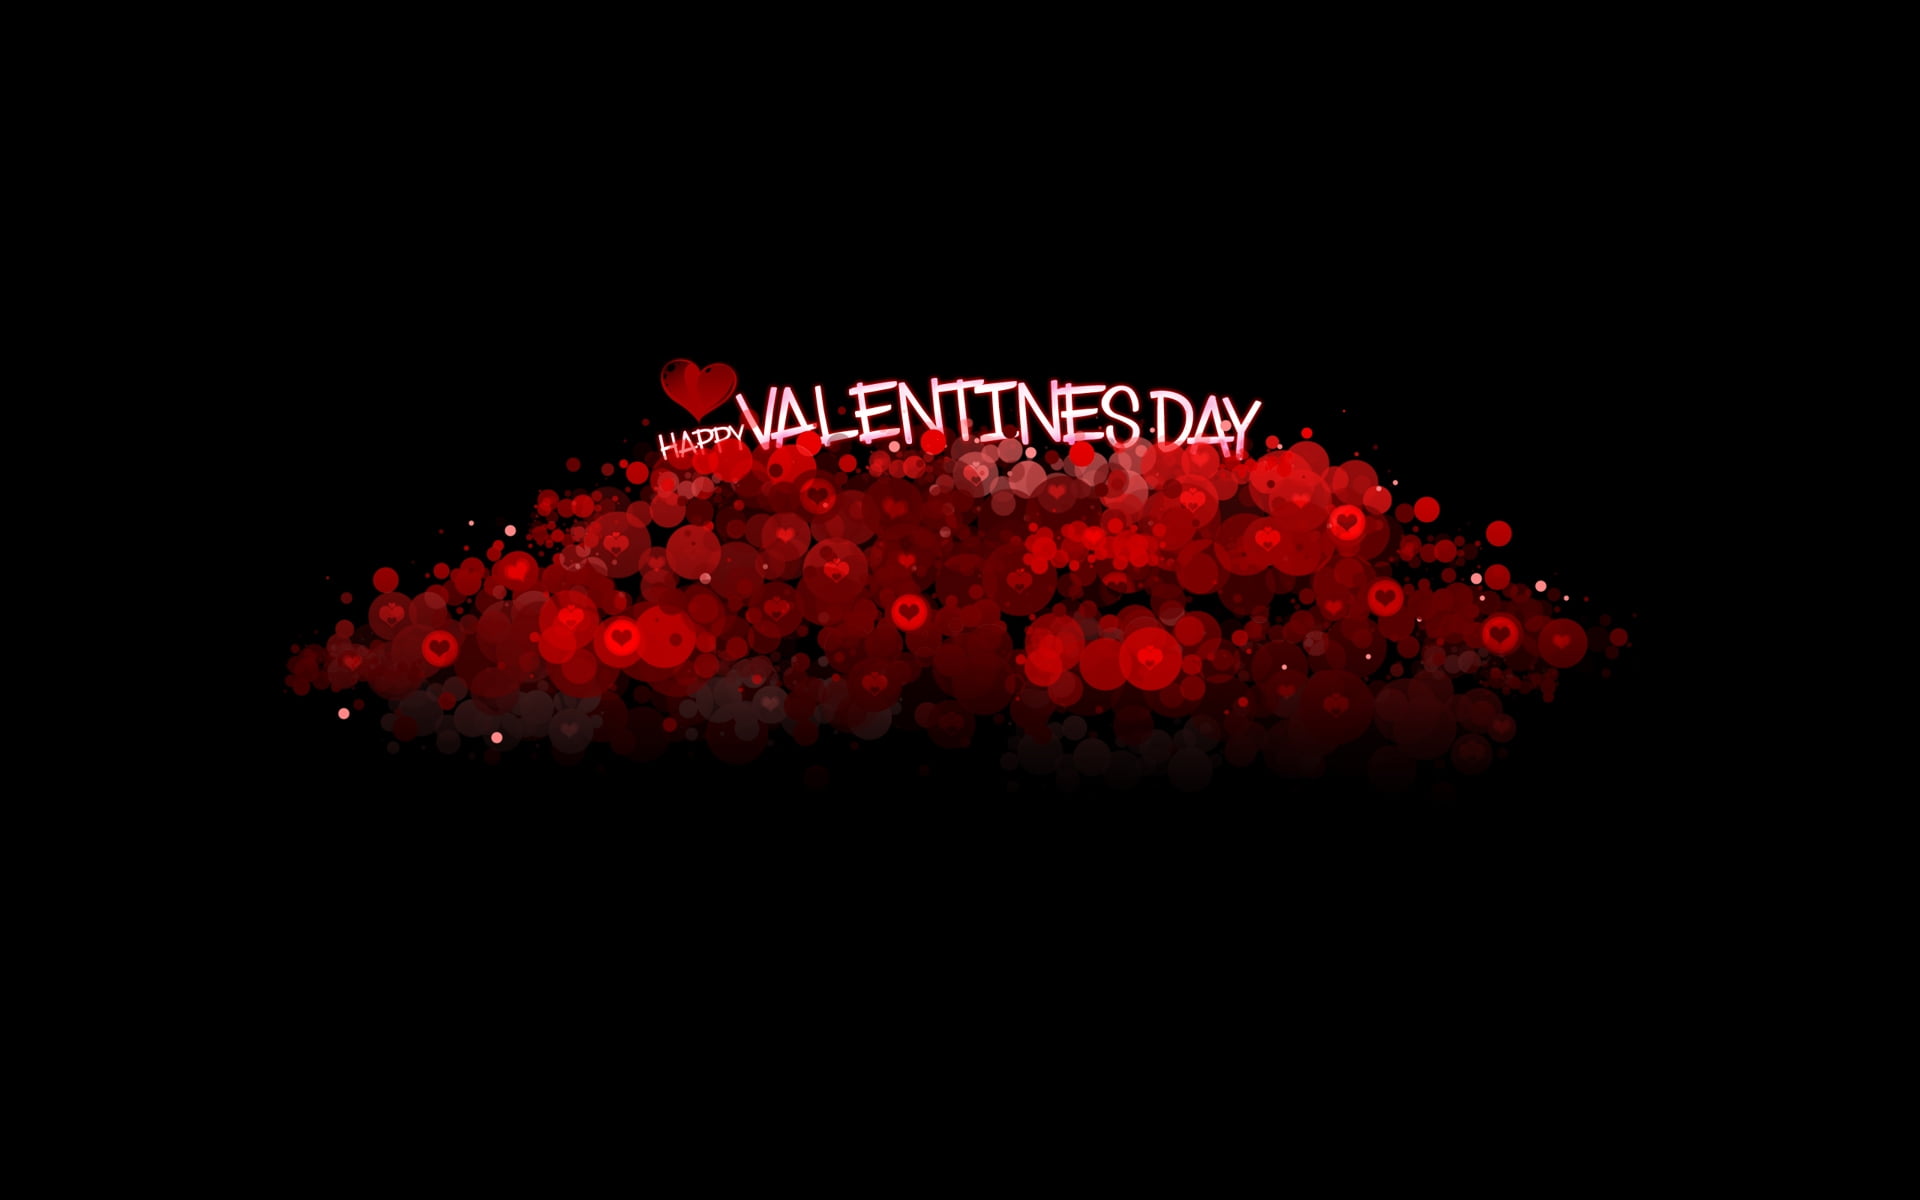 Valentines Day illustration